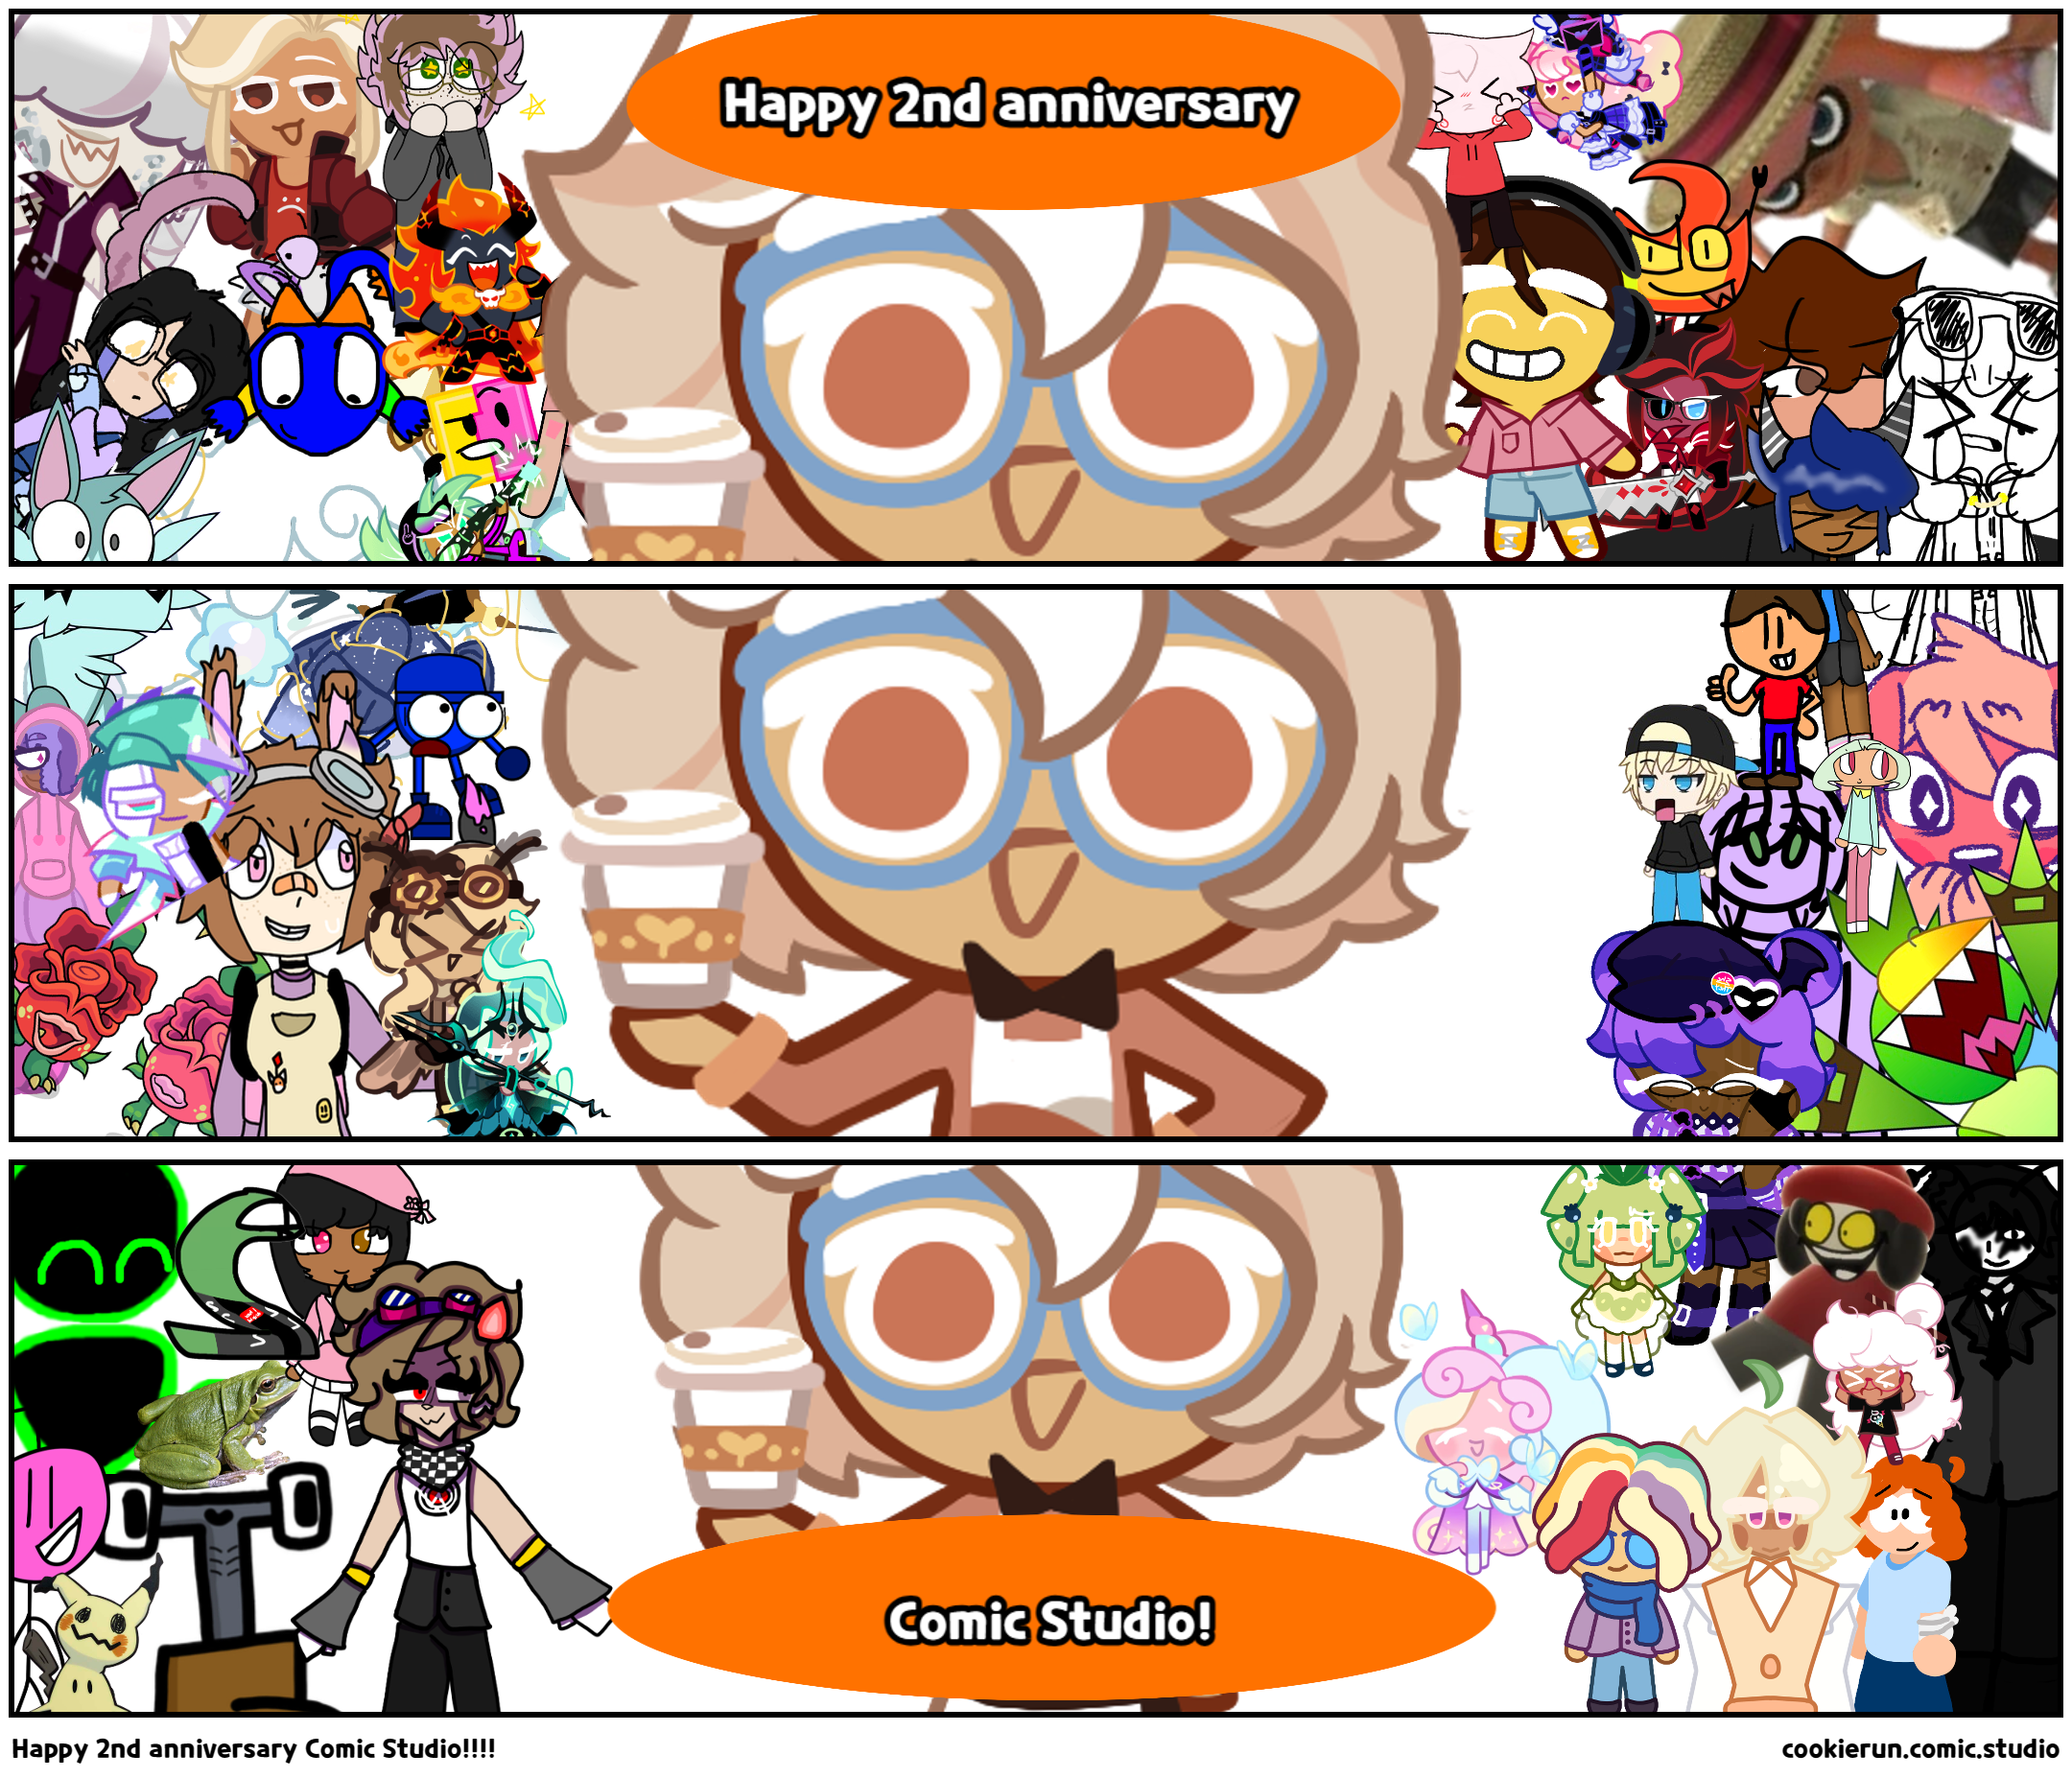 Happy 2nd anniversary Comic Studio!!!!